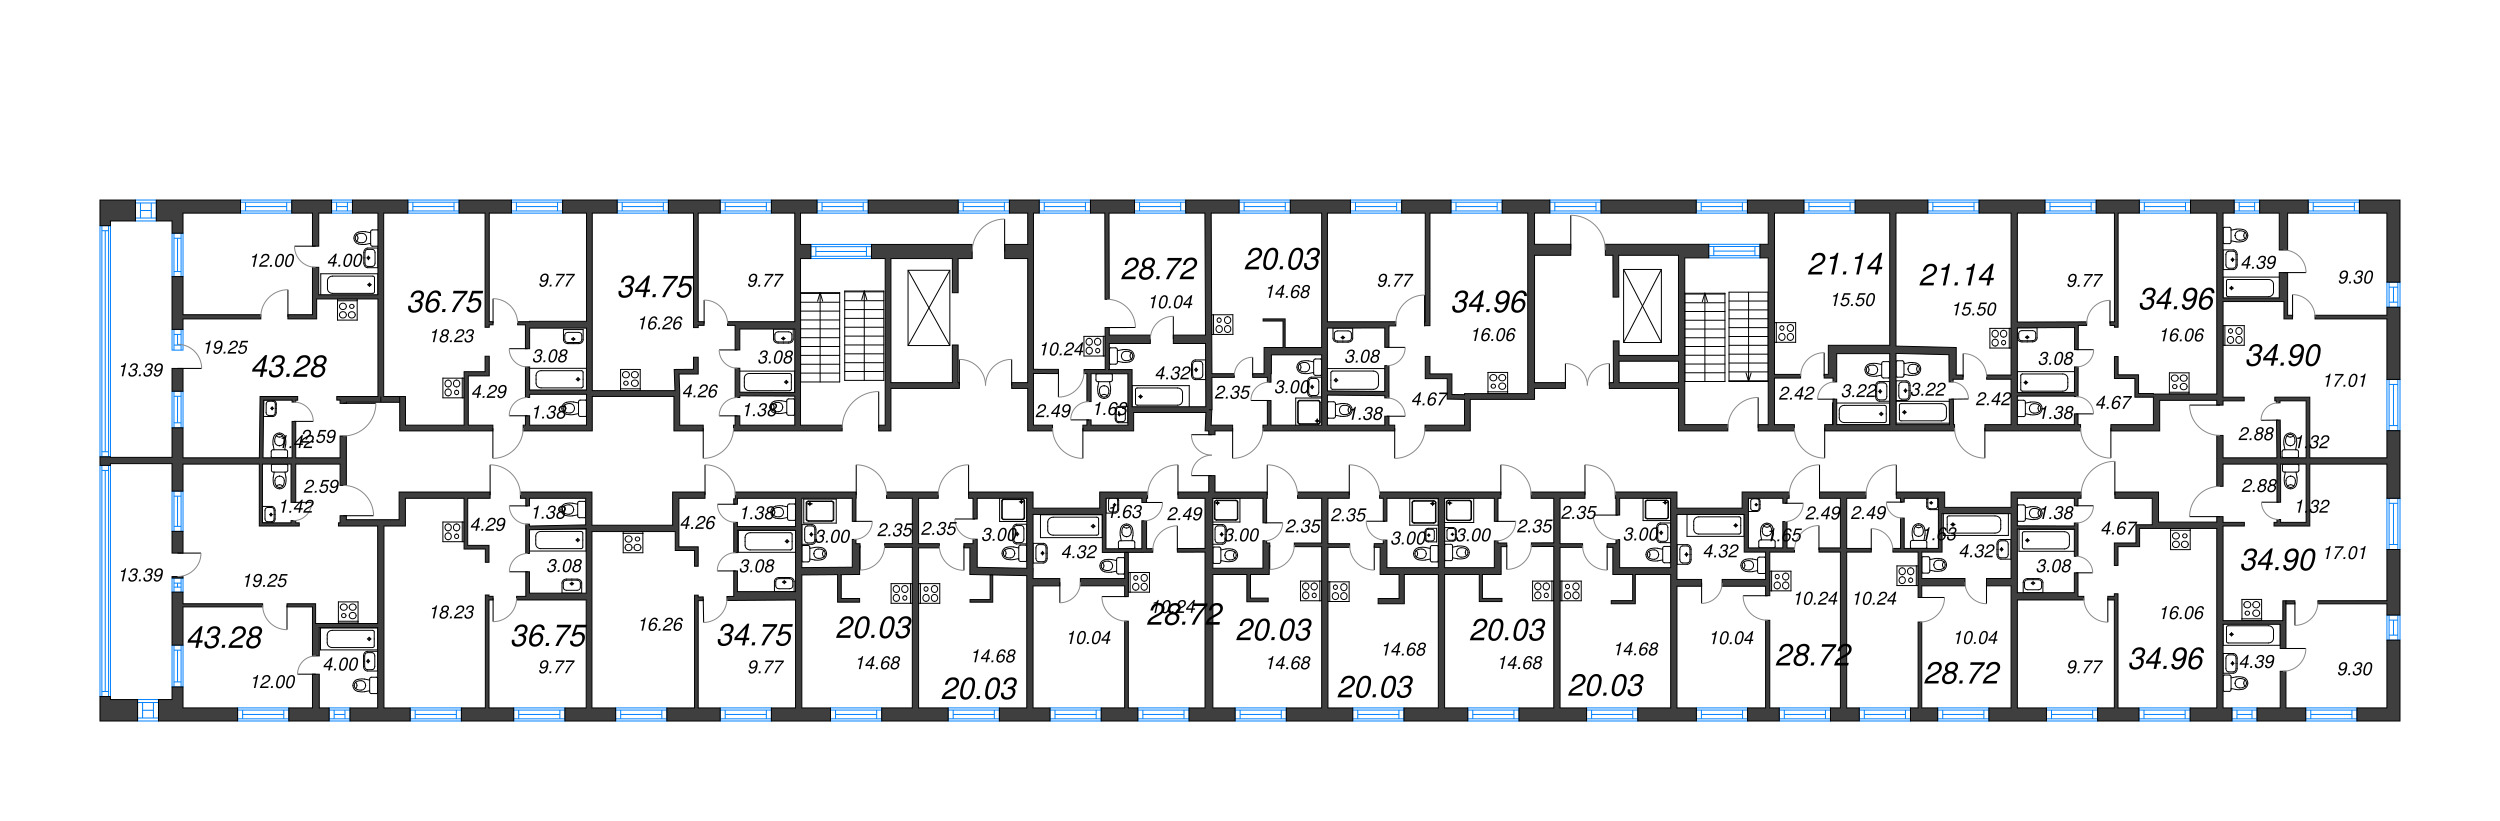 2-комнатная (Евро) квартира, 36.75 м² - планировка этажа